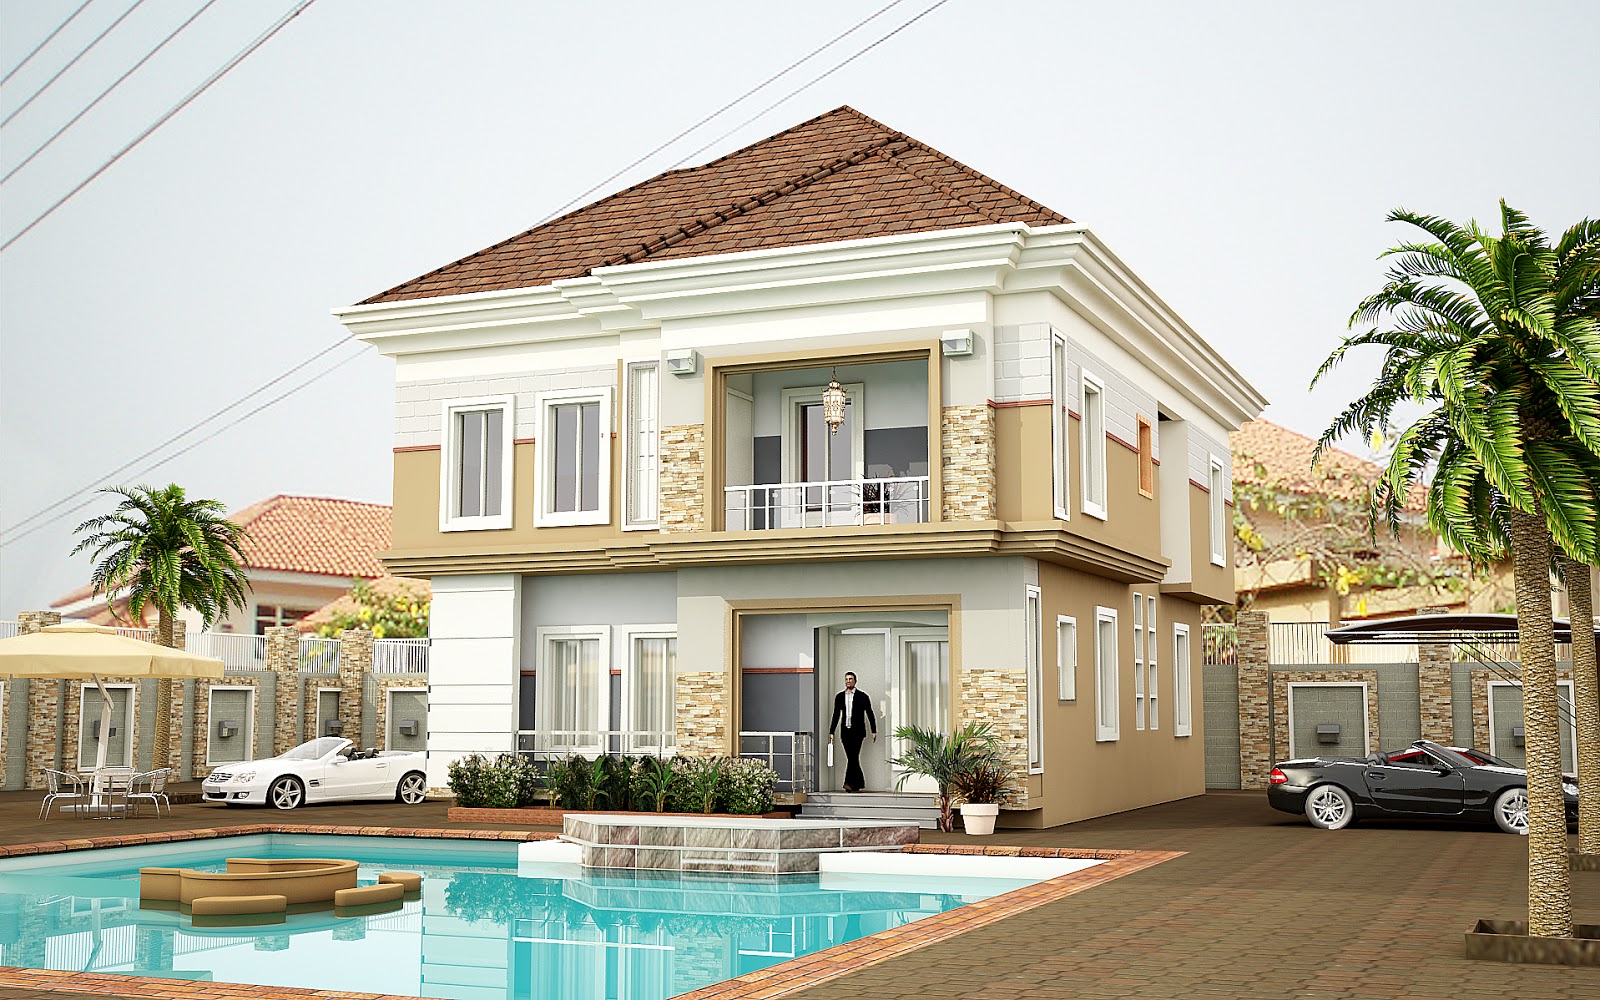 Top 5 Beautiful House Designs In Nigeria | Jiji.ng Blog